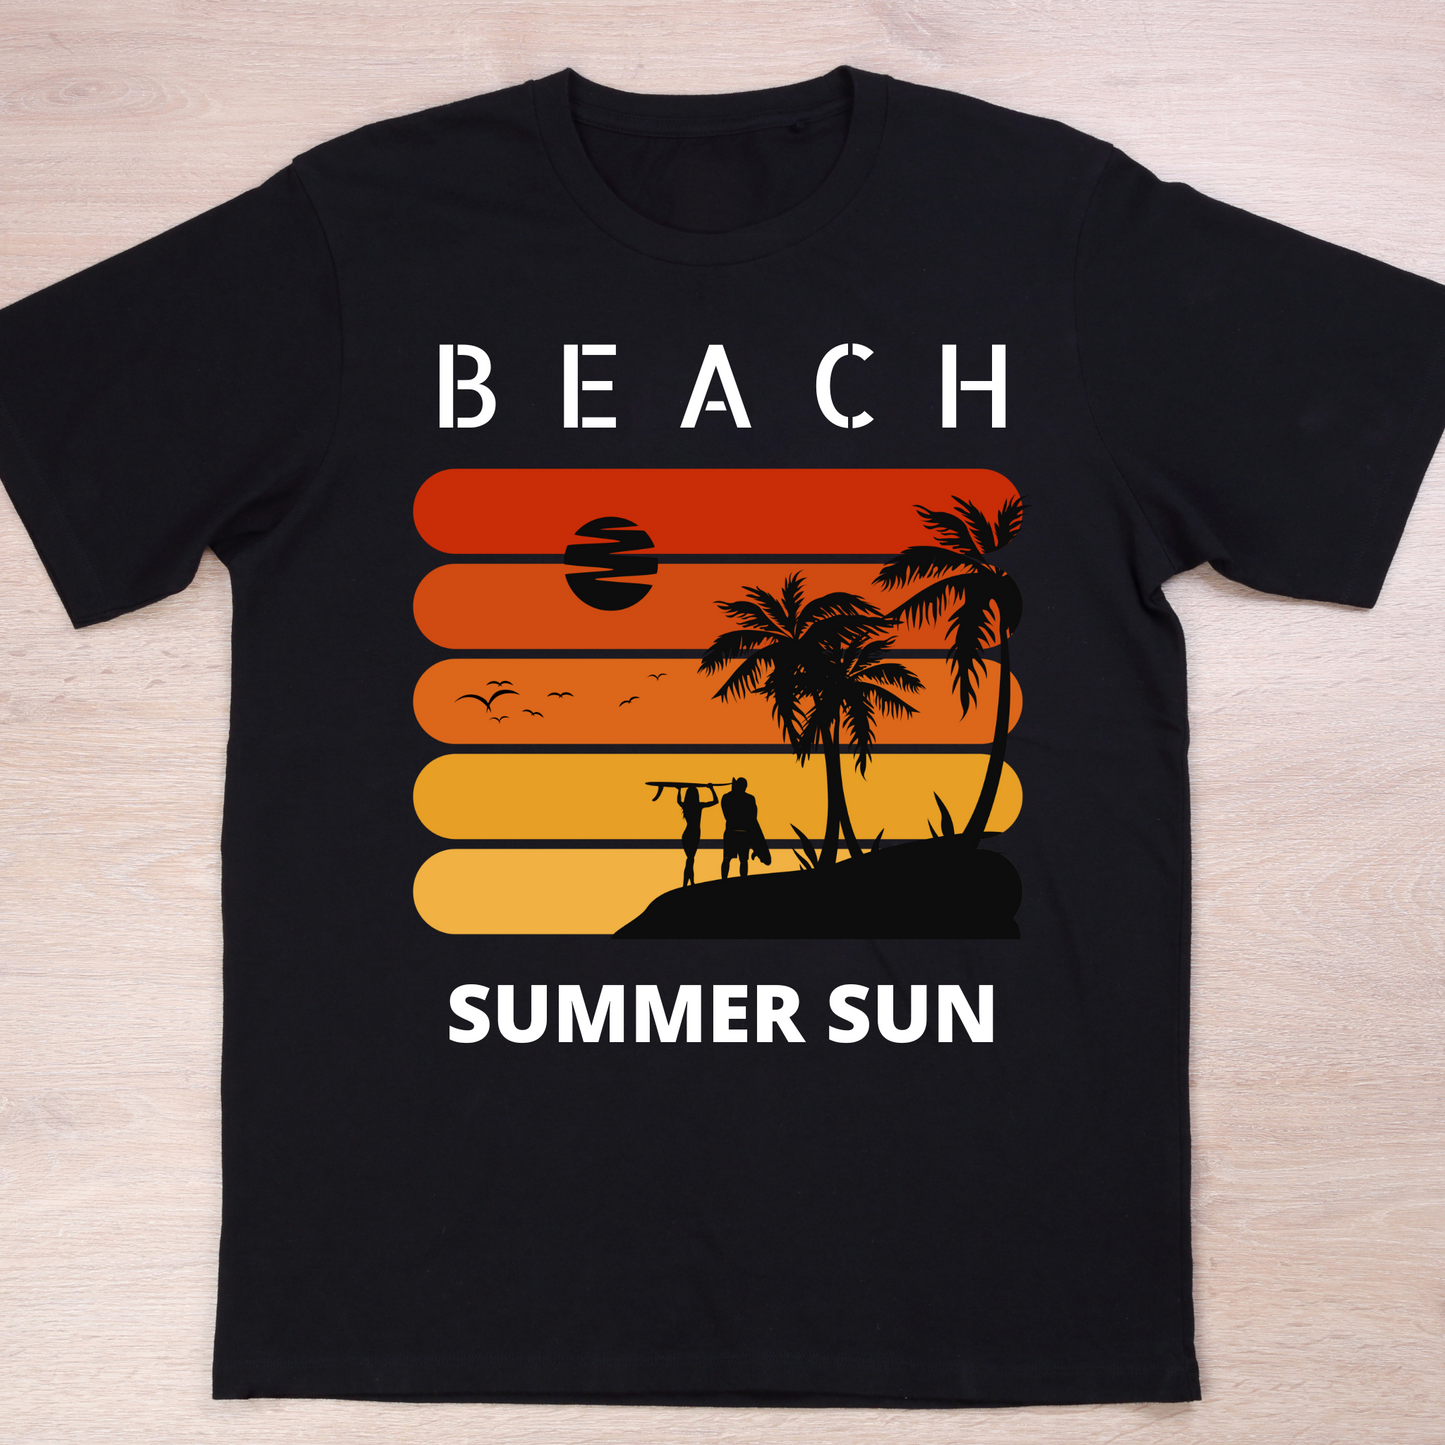 Beach summer sun beach fun vacation T-shirt - Premium t-shirt from Lees Krazy Teez - Just $19.95! Shop now at Lees Krazy Teez